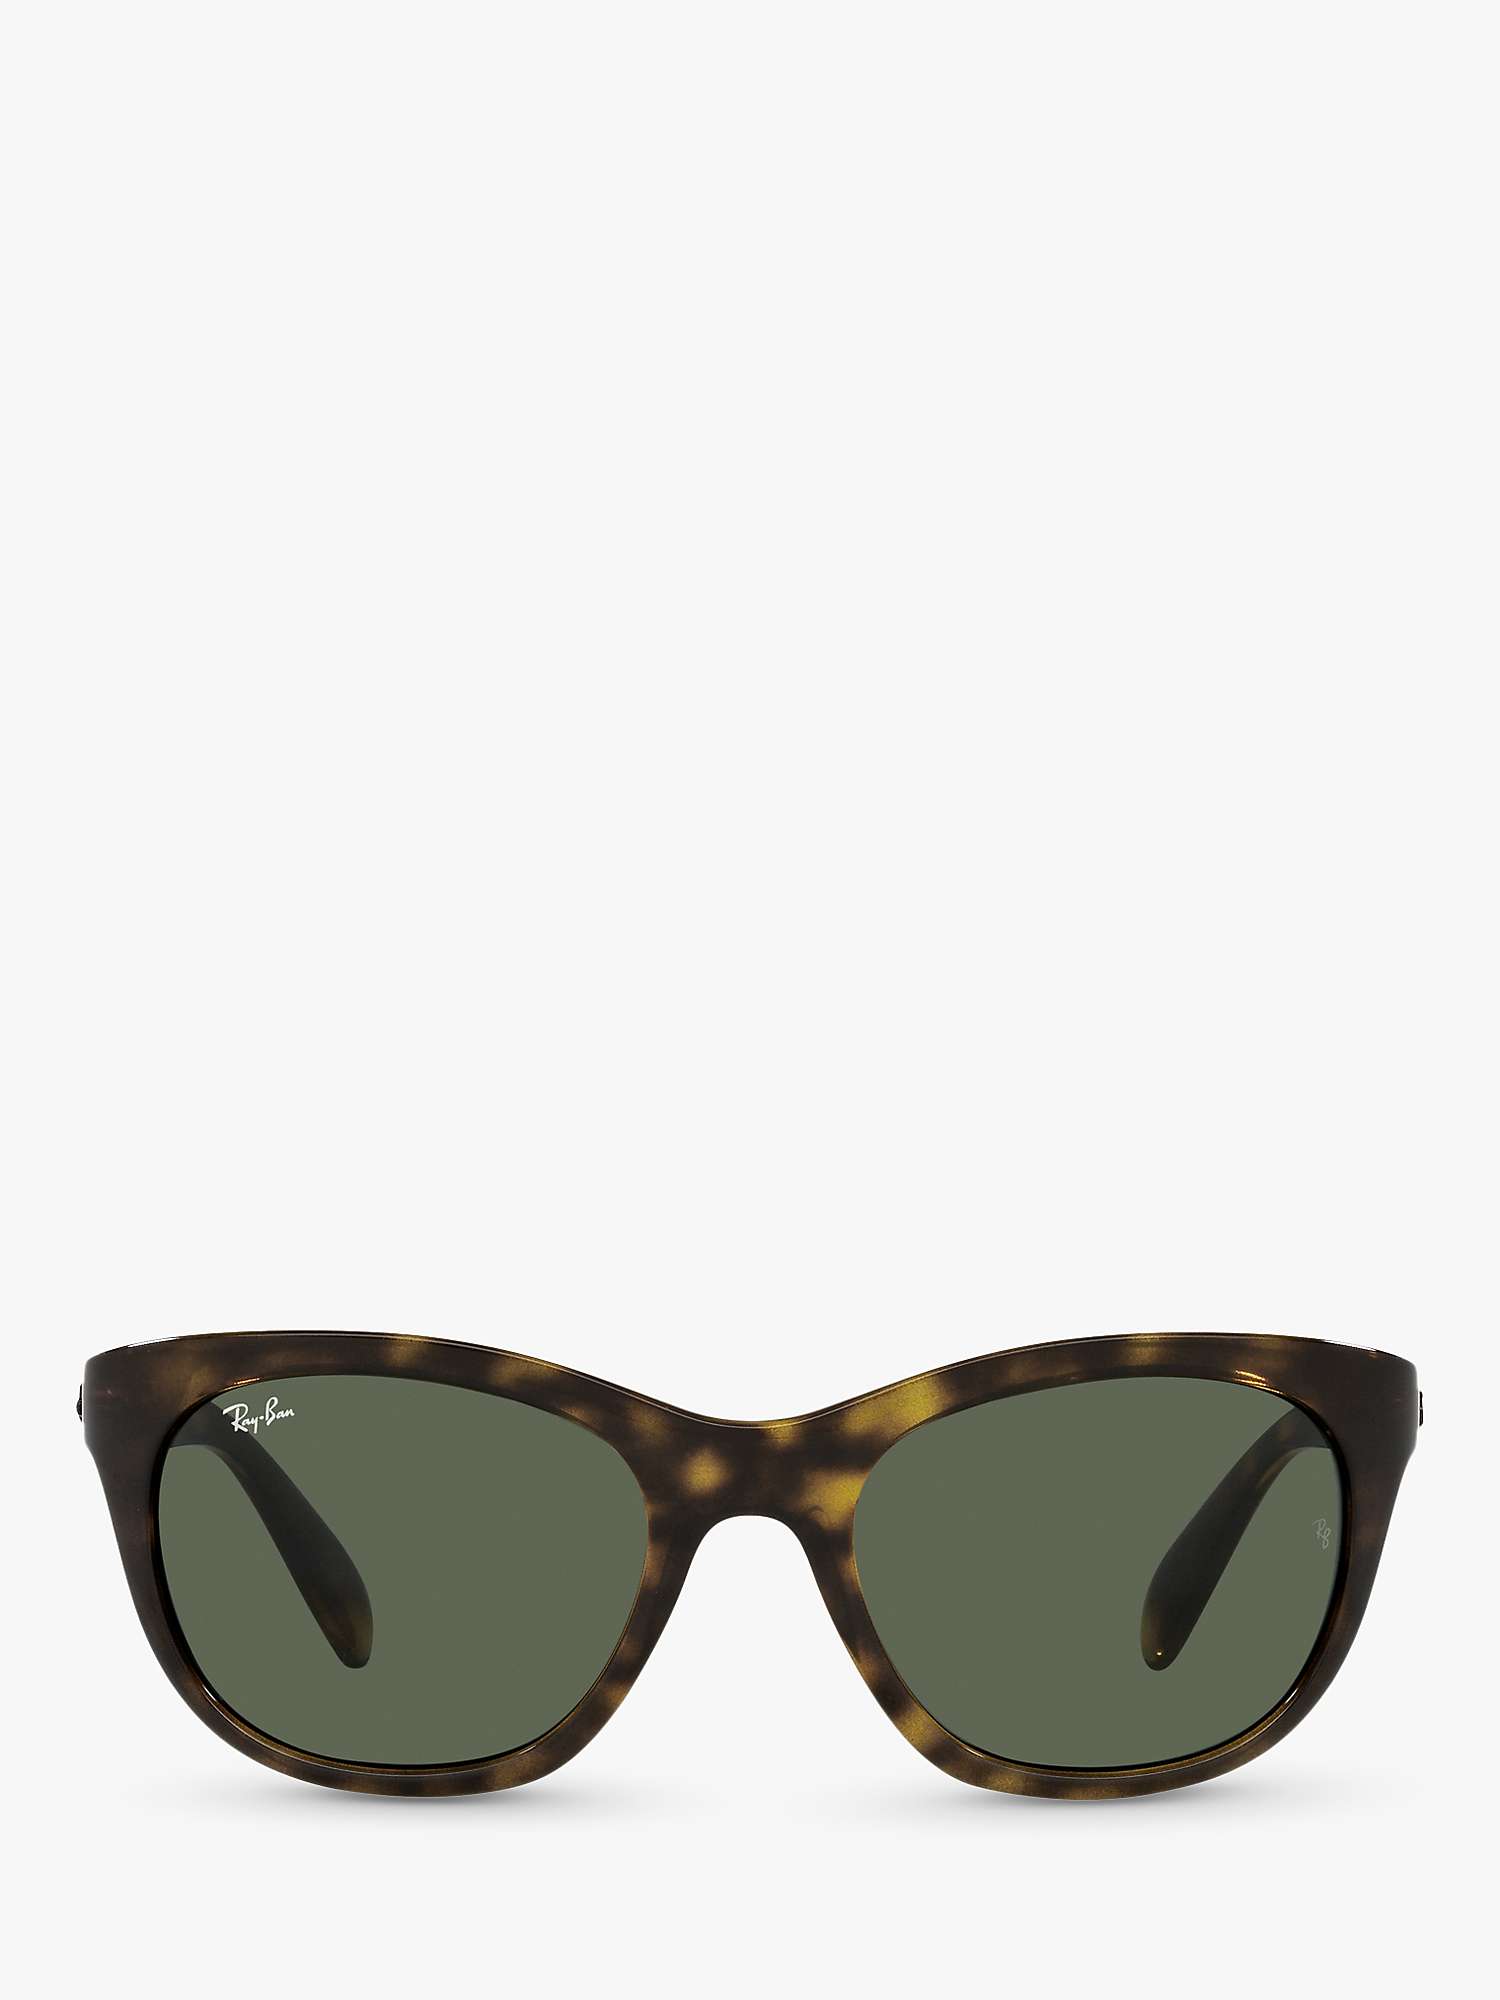 Buy Ray-Ban RB4216 Women's Square Sunglasses, Havana/Green Online at johnlewis.com